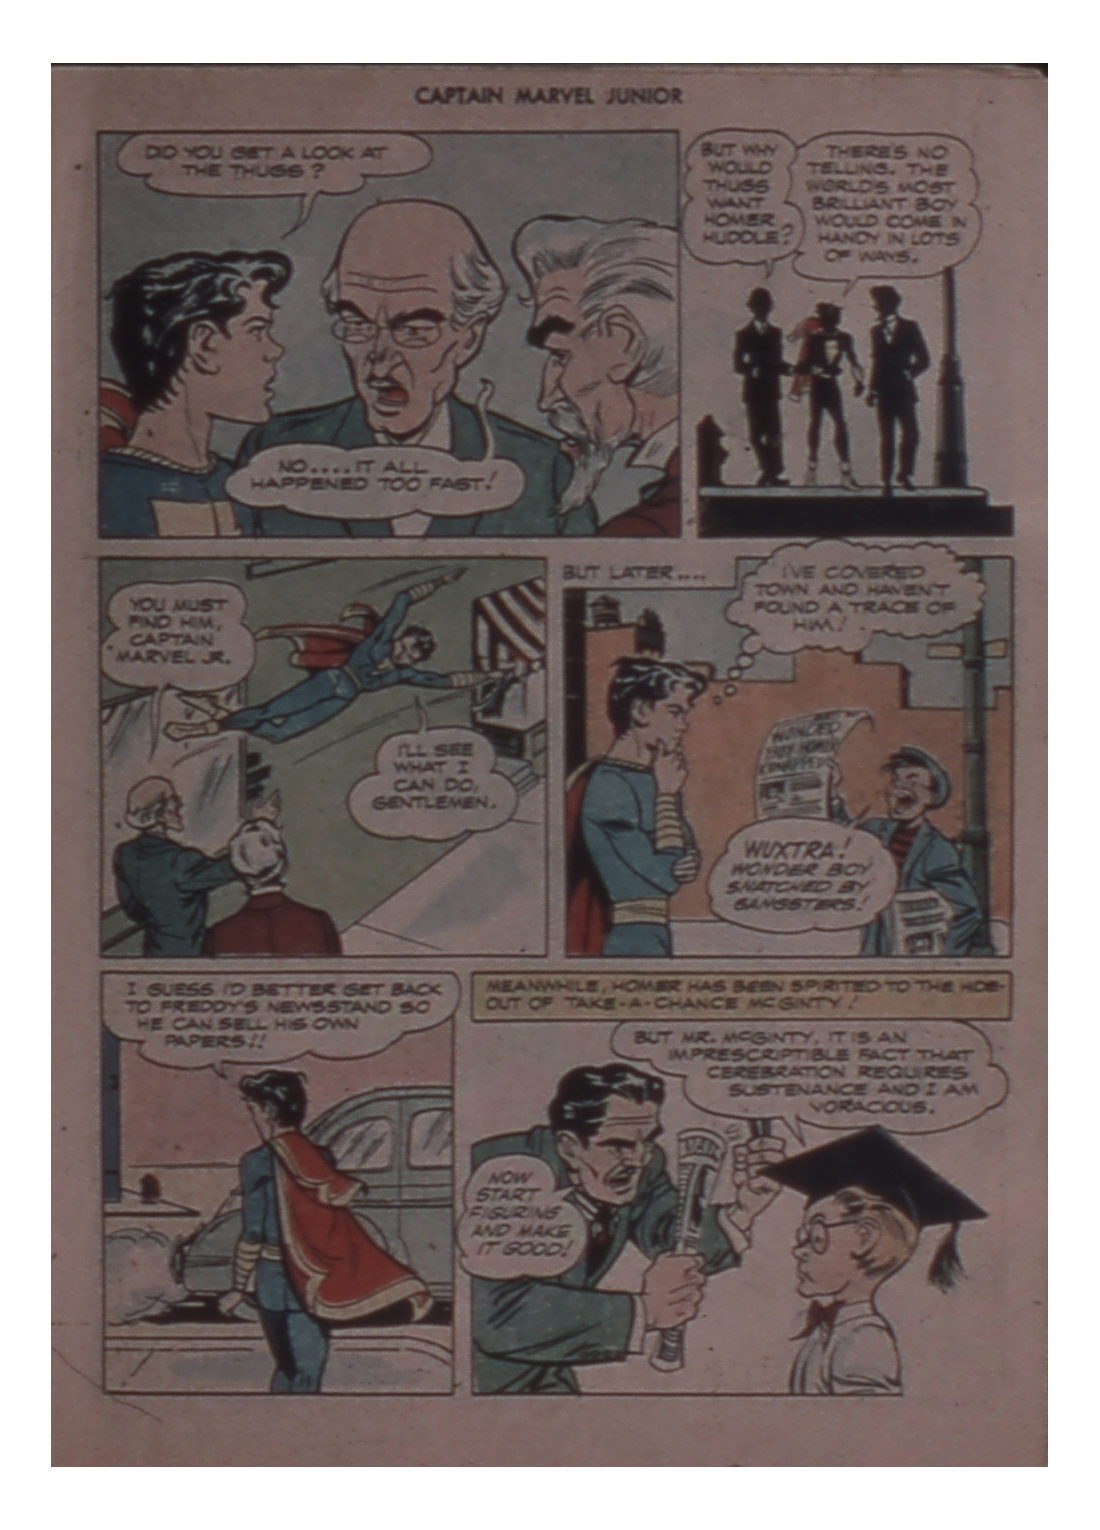 Read online Captain Marvel, Jr. comic -  Issue #58 - 19